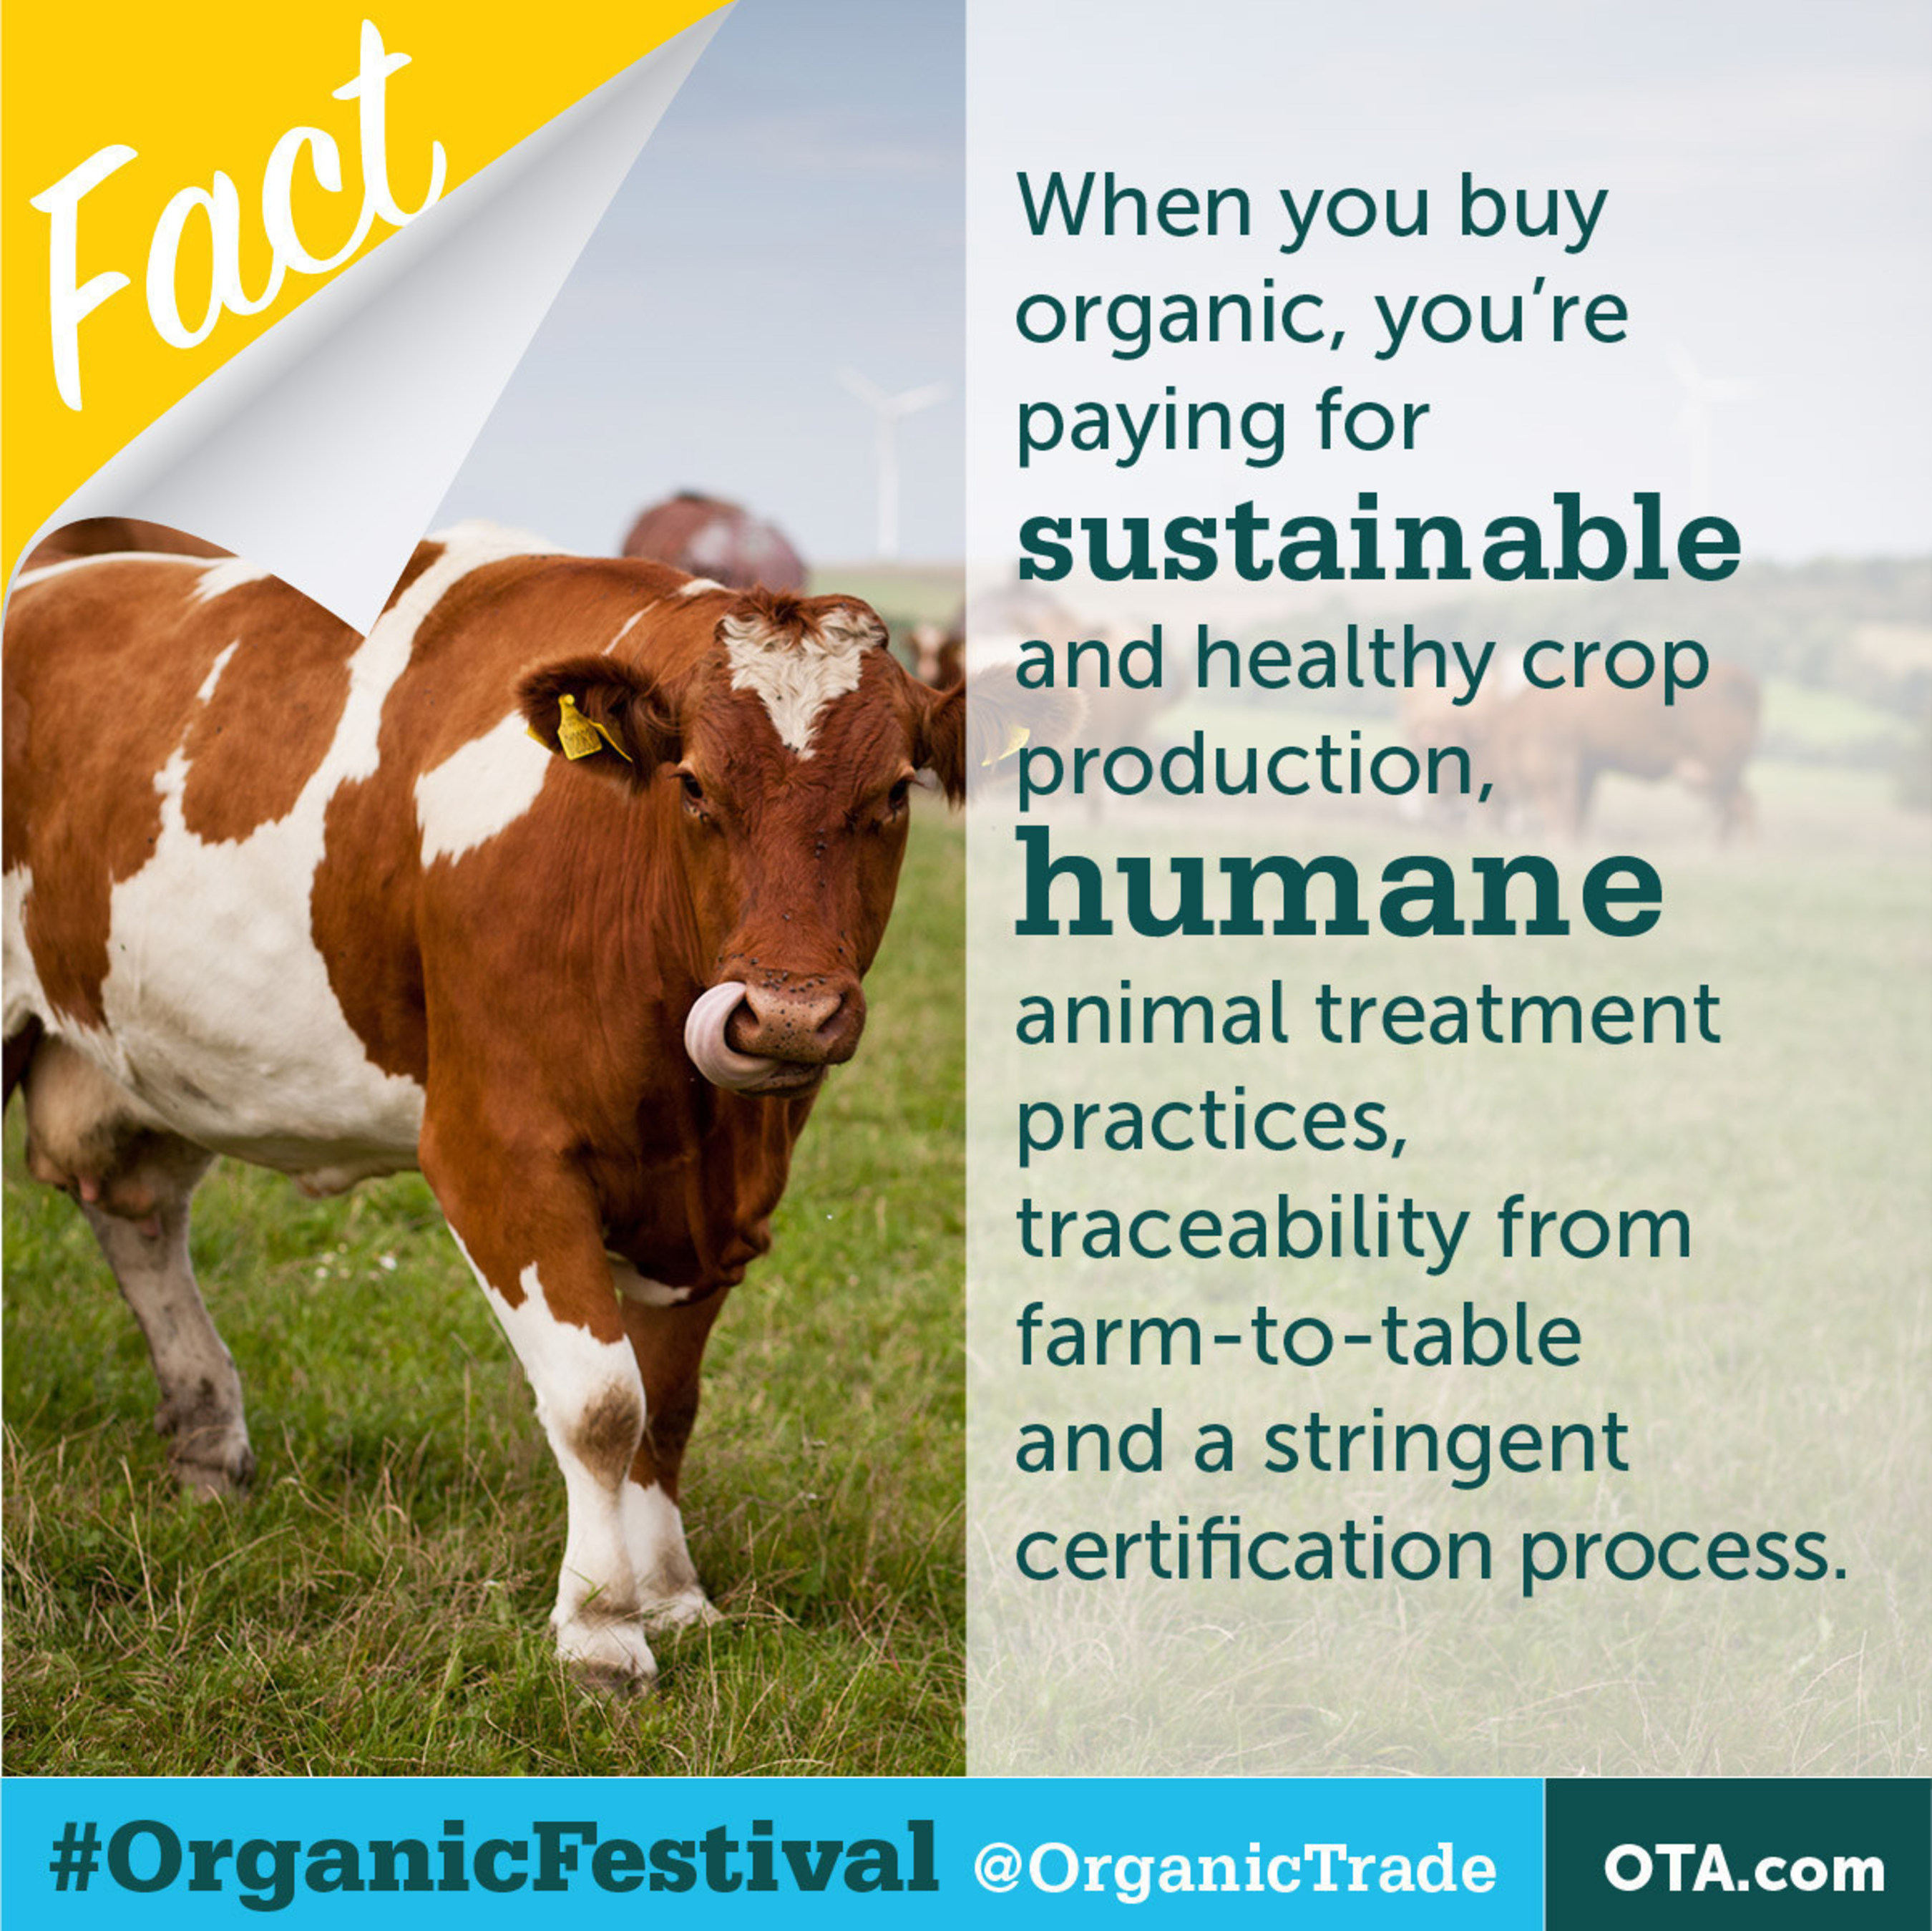 Organic offers many benefits.